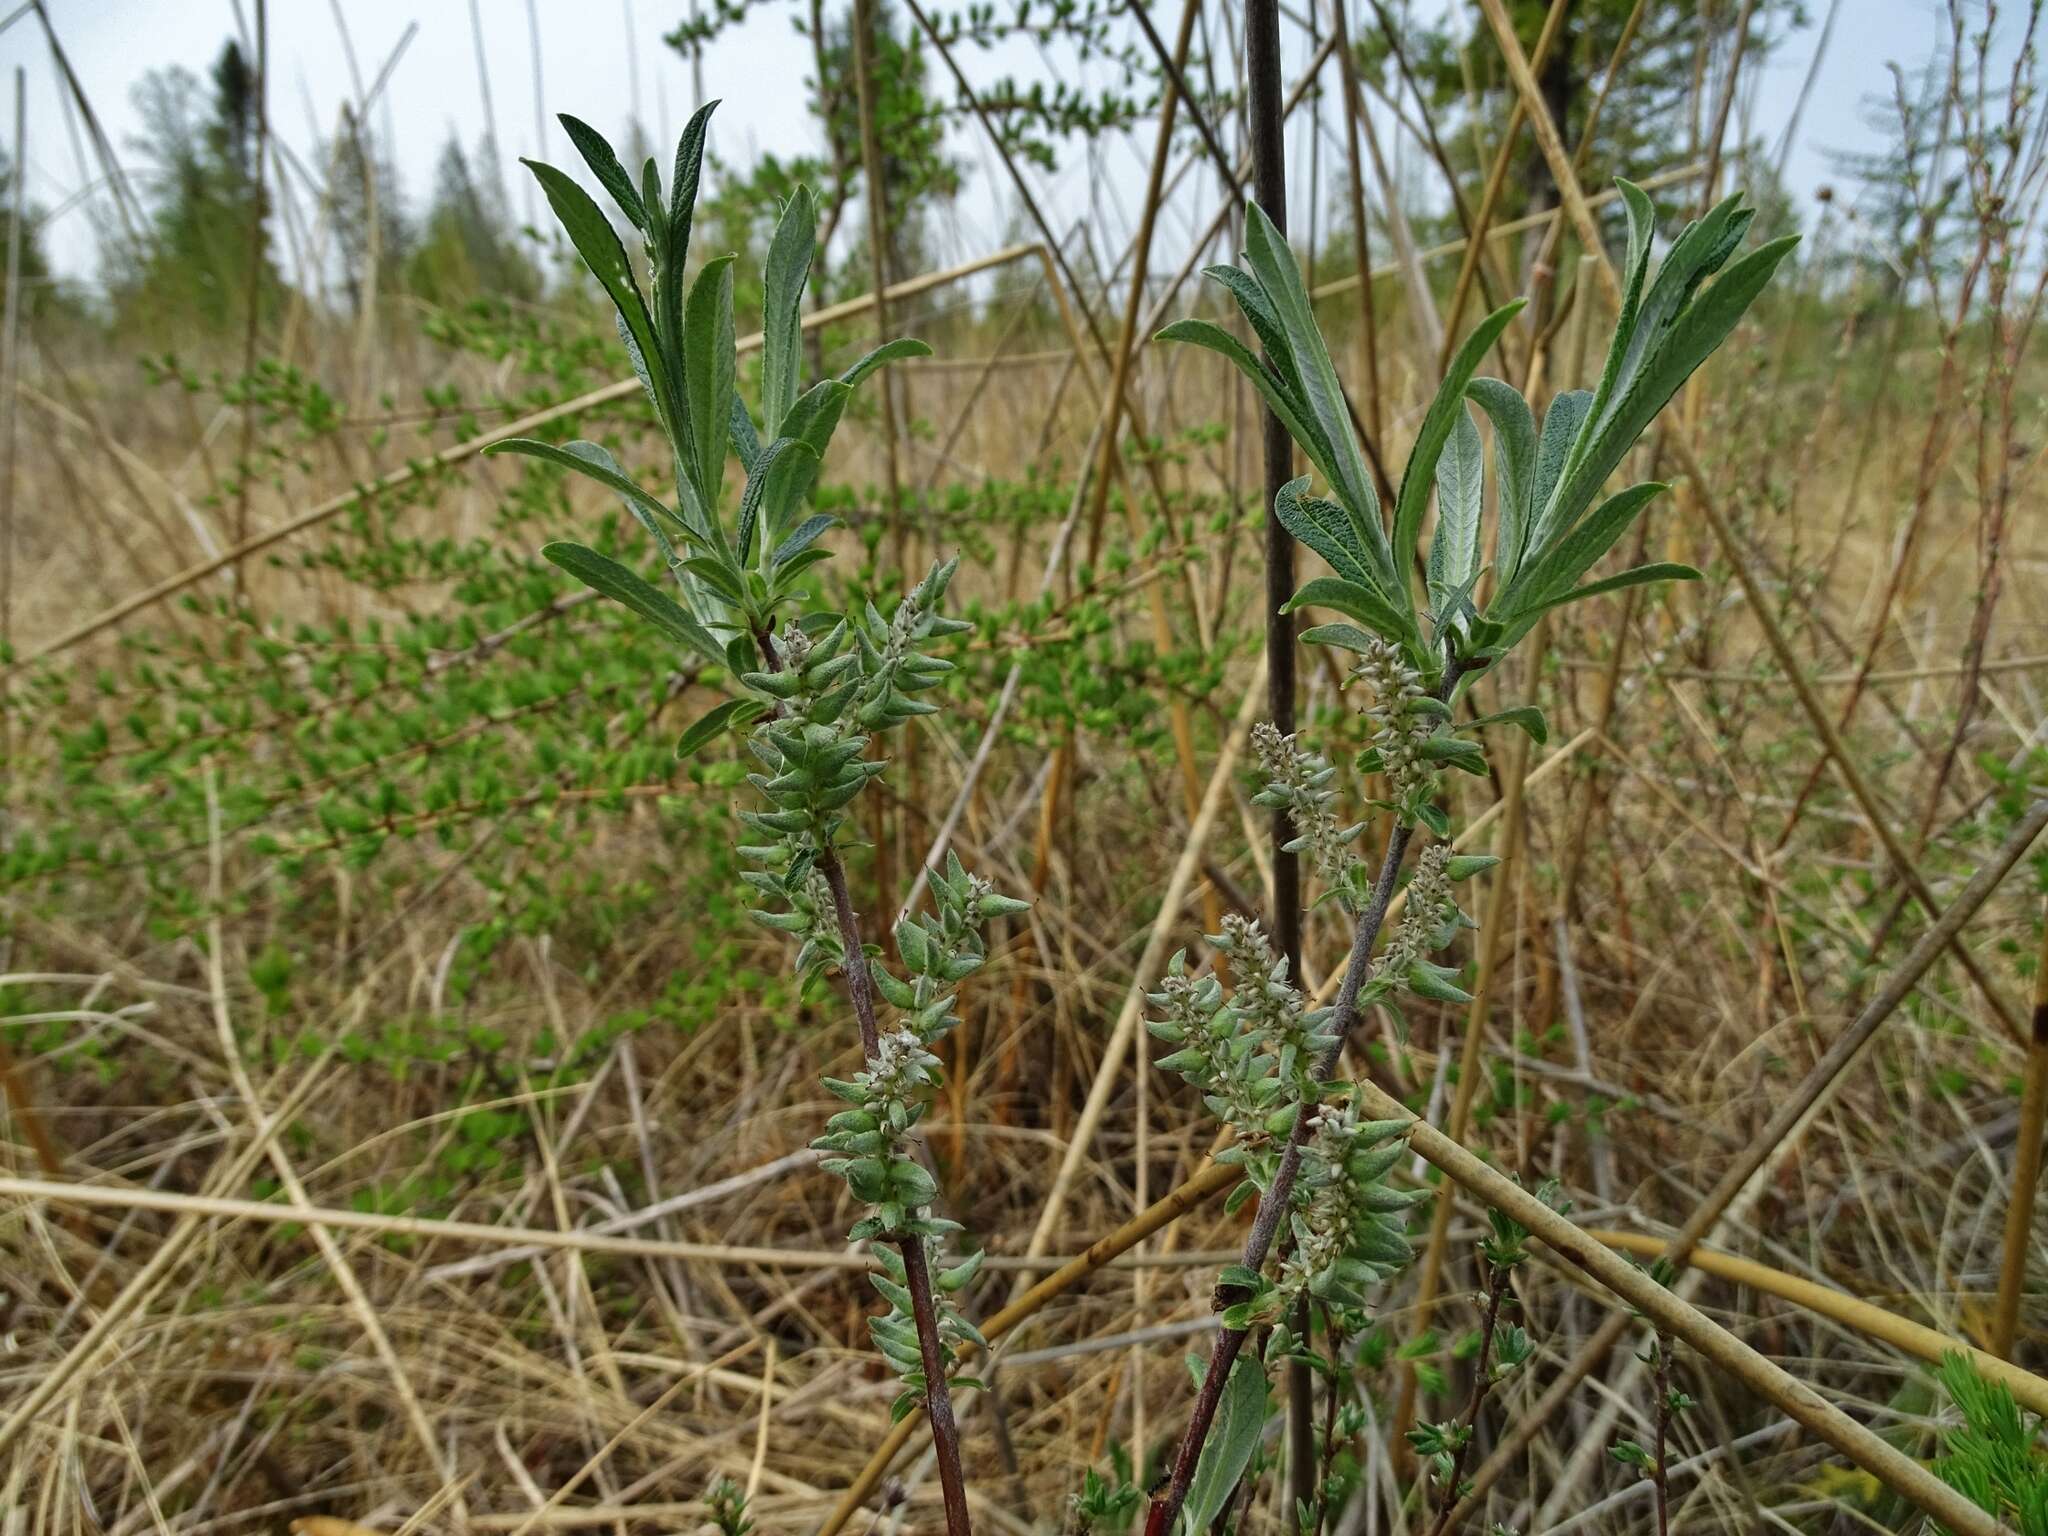 Image of sageleaf willow